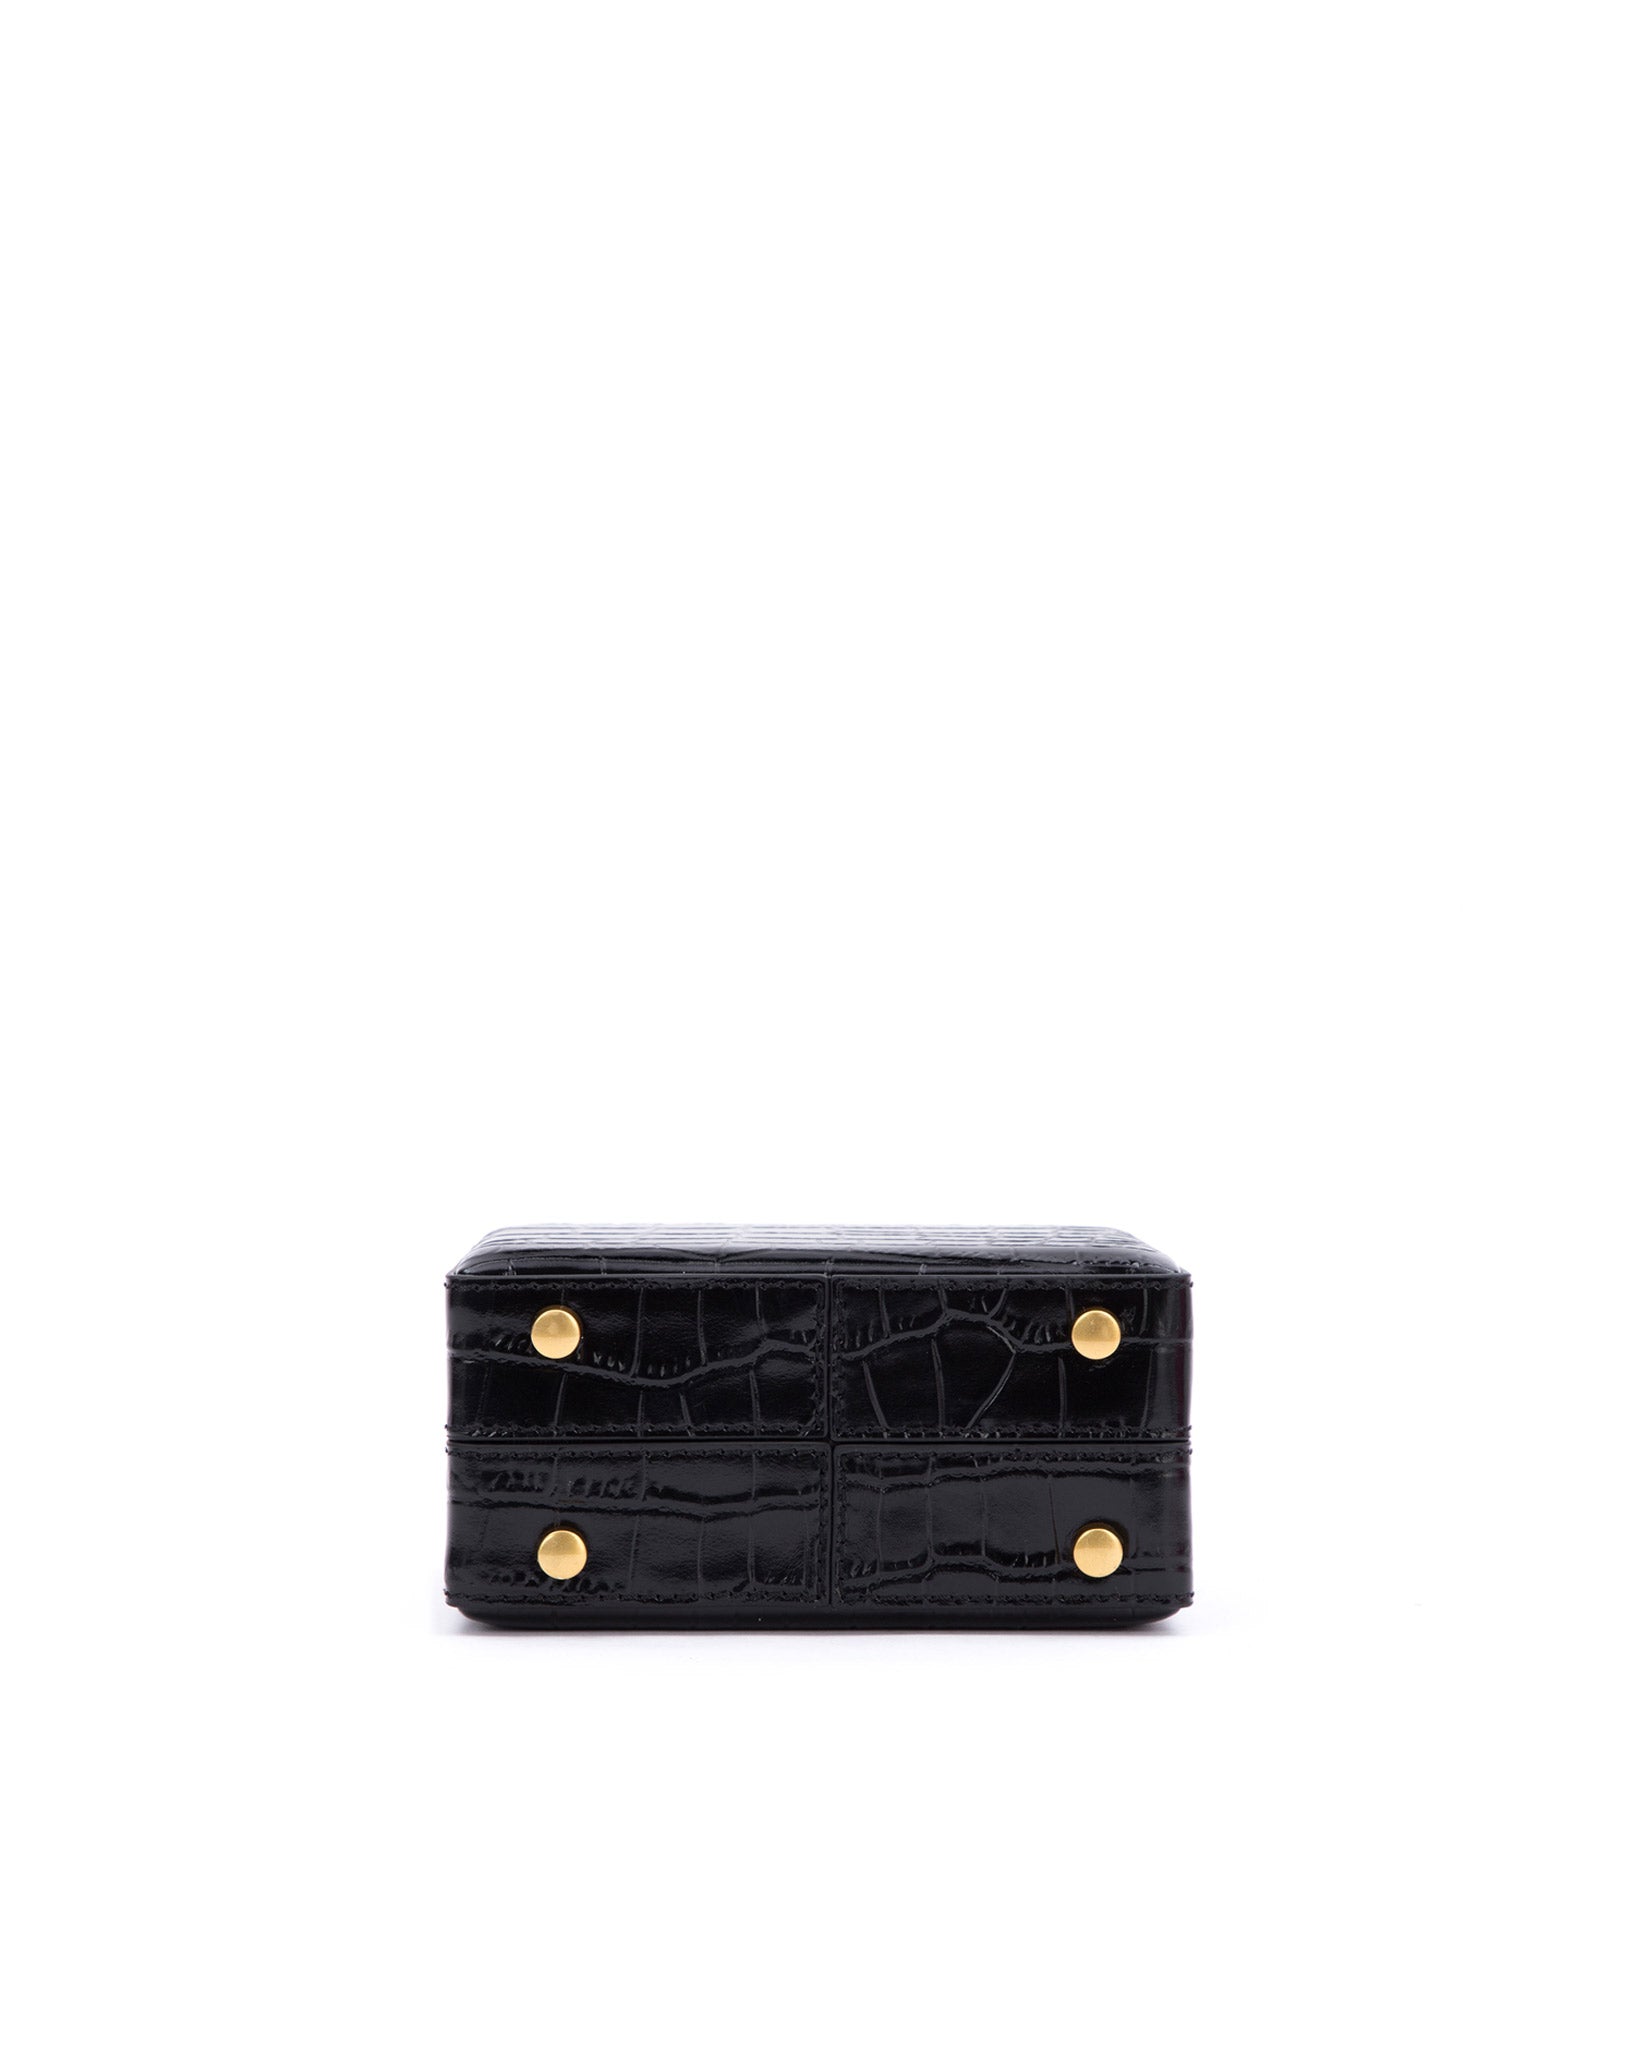 Brandon Blackwood New York - Mini Kendrick Trunk - Black Croc Embossed Leather w/ Brass Hardware